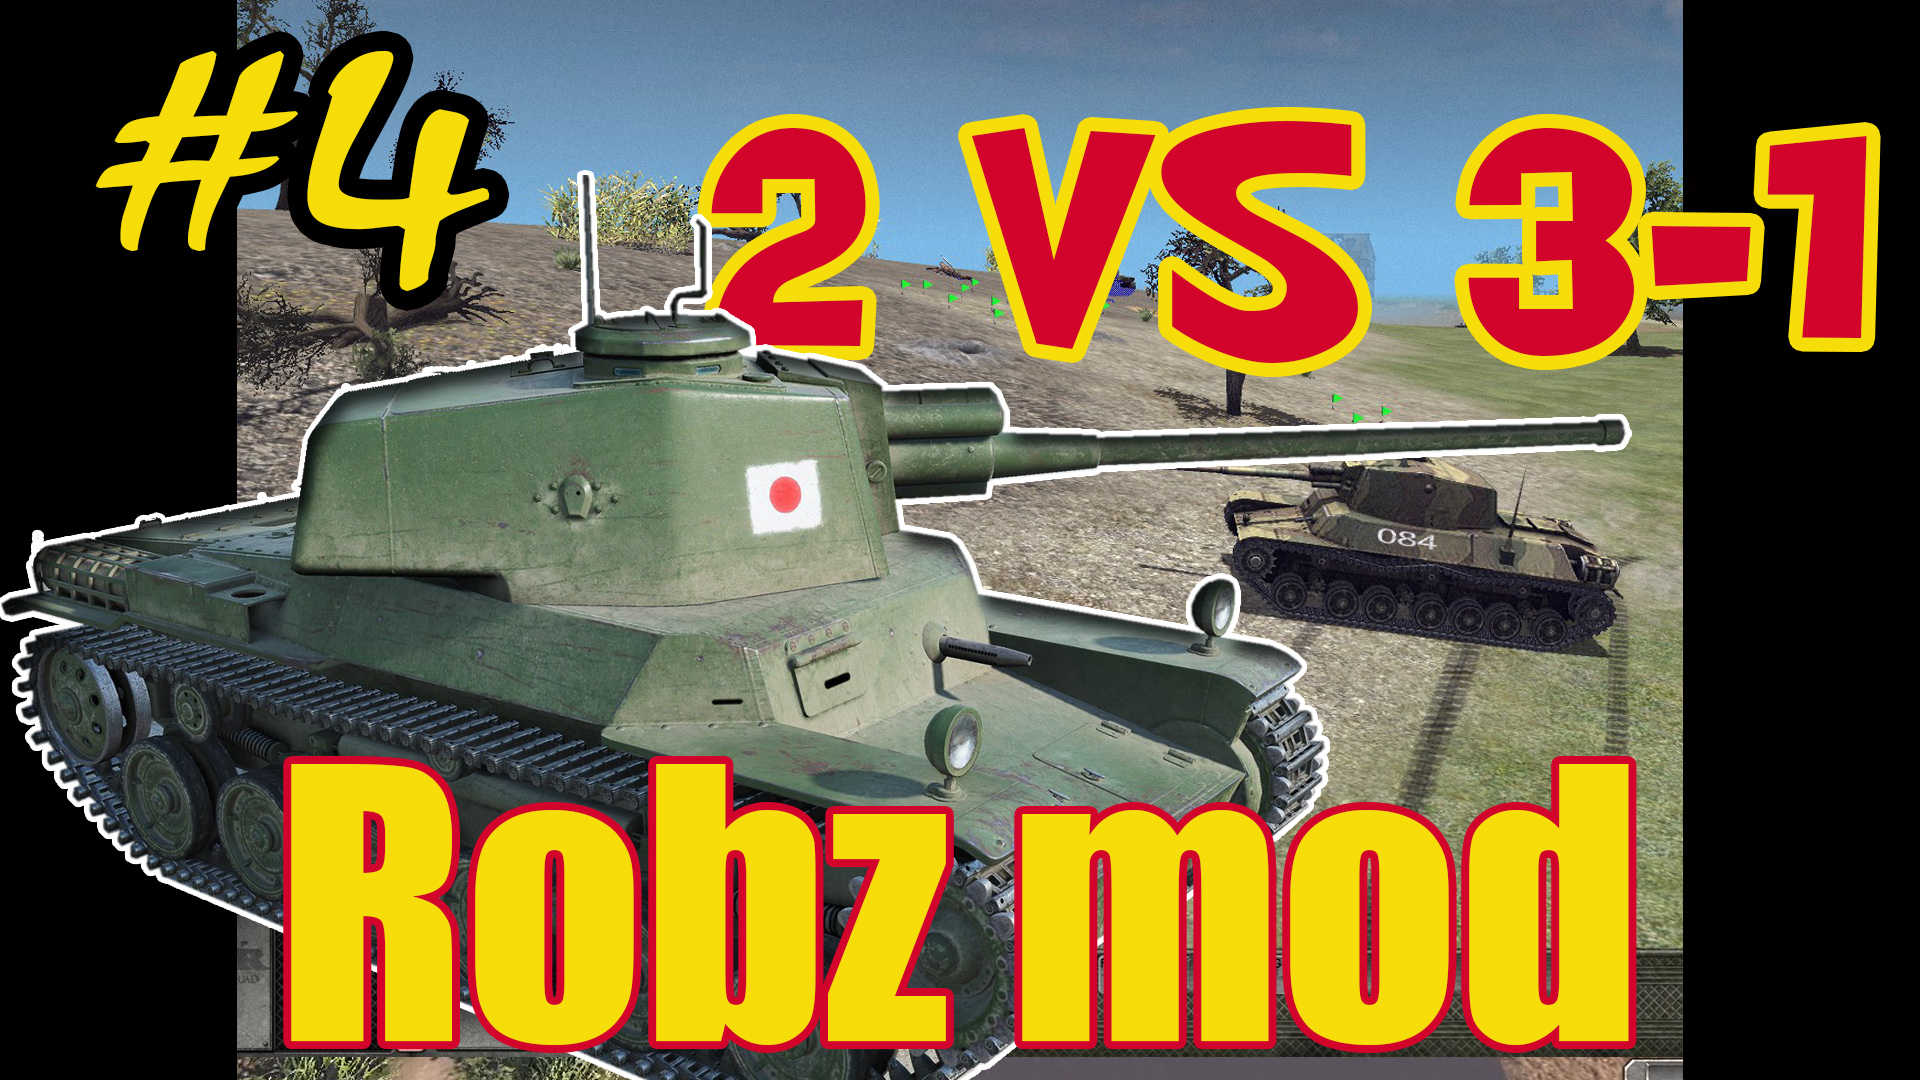 Robz realism mod multiplayer (2 vs 3-1) - #4 ? В Тылу Врага: Штурм 2 ? Men of War: Assault Squad